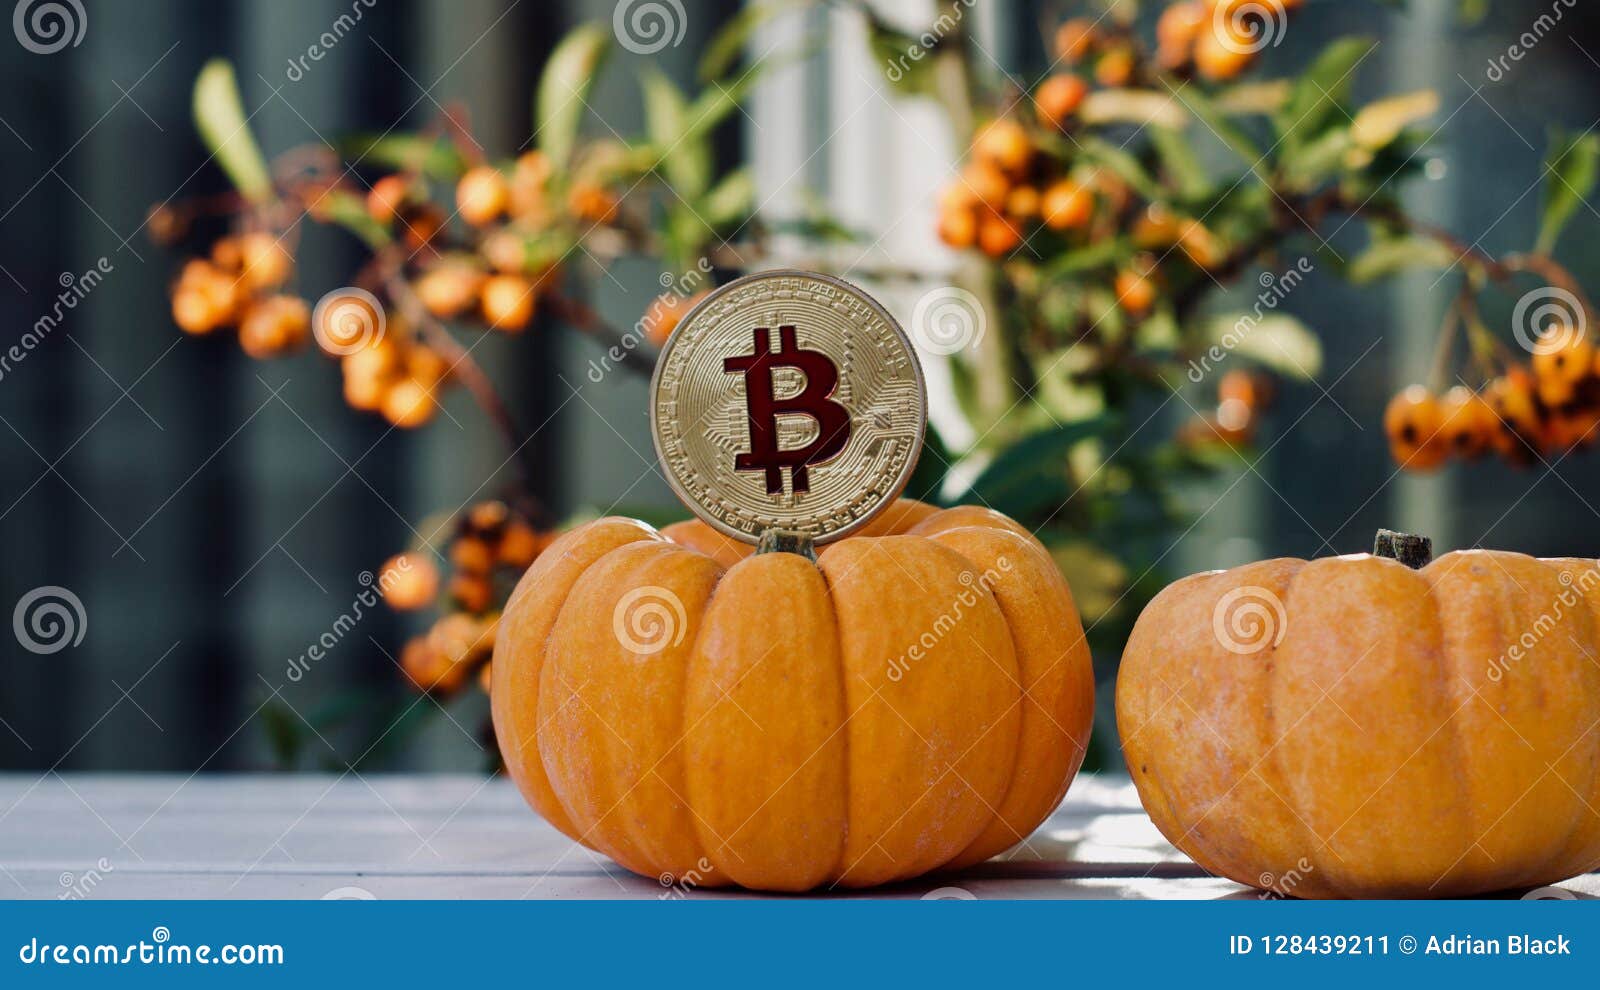 bitcoins to dollars history of halloween